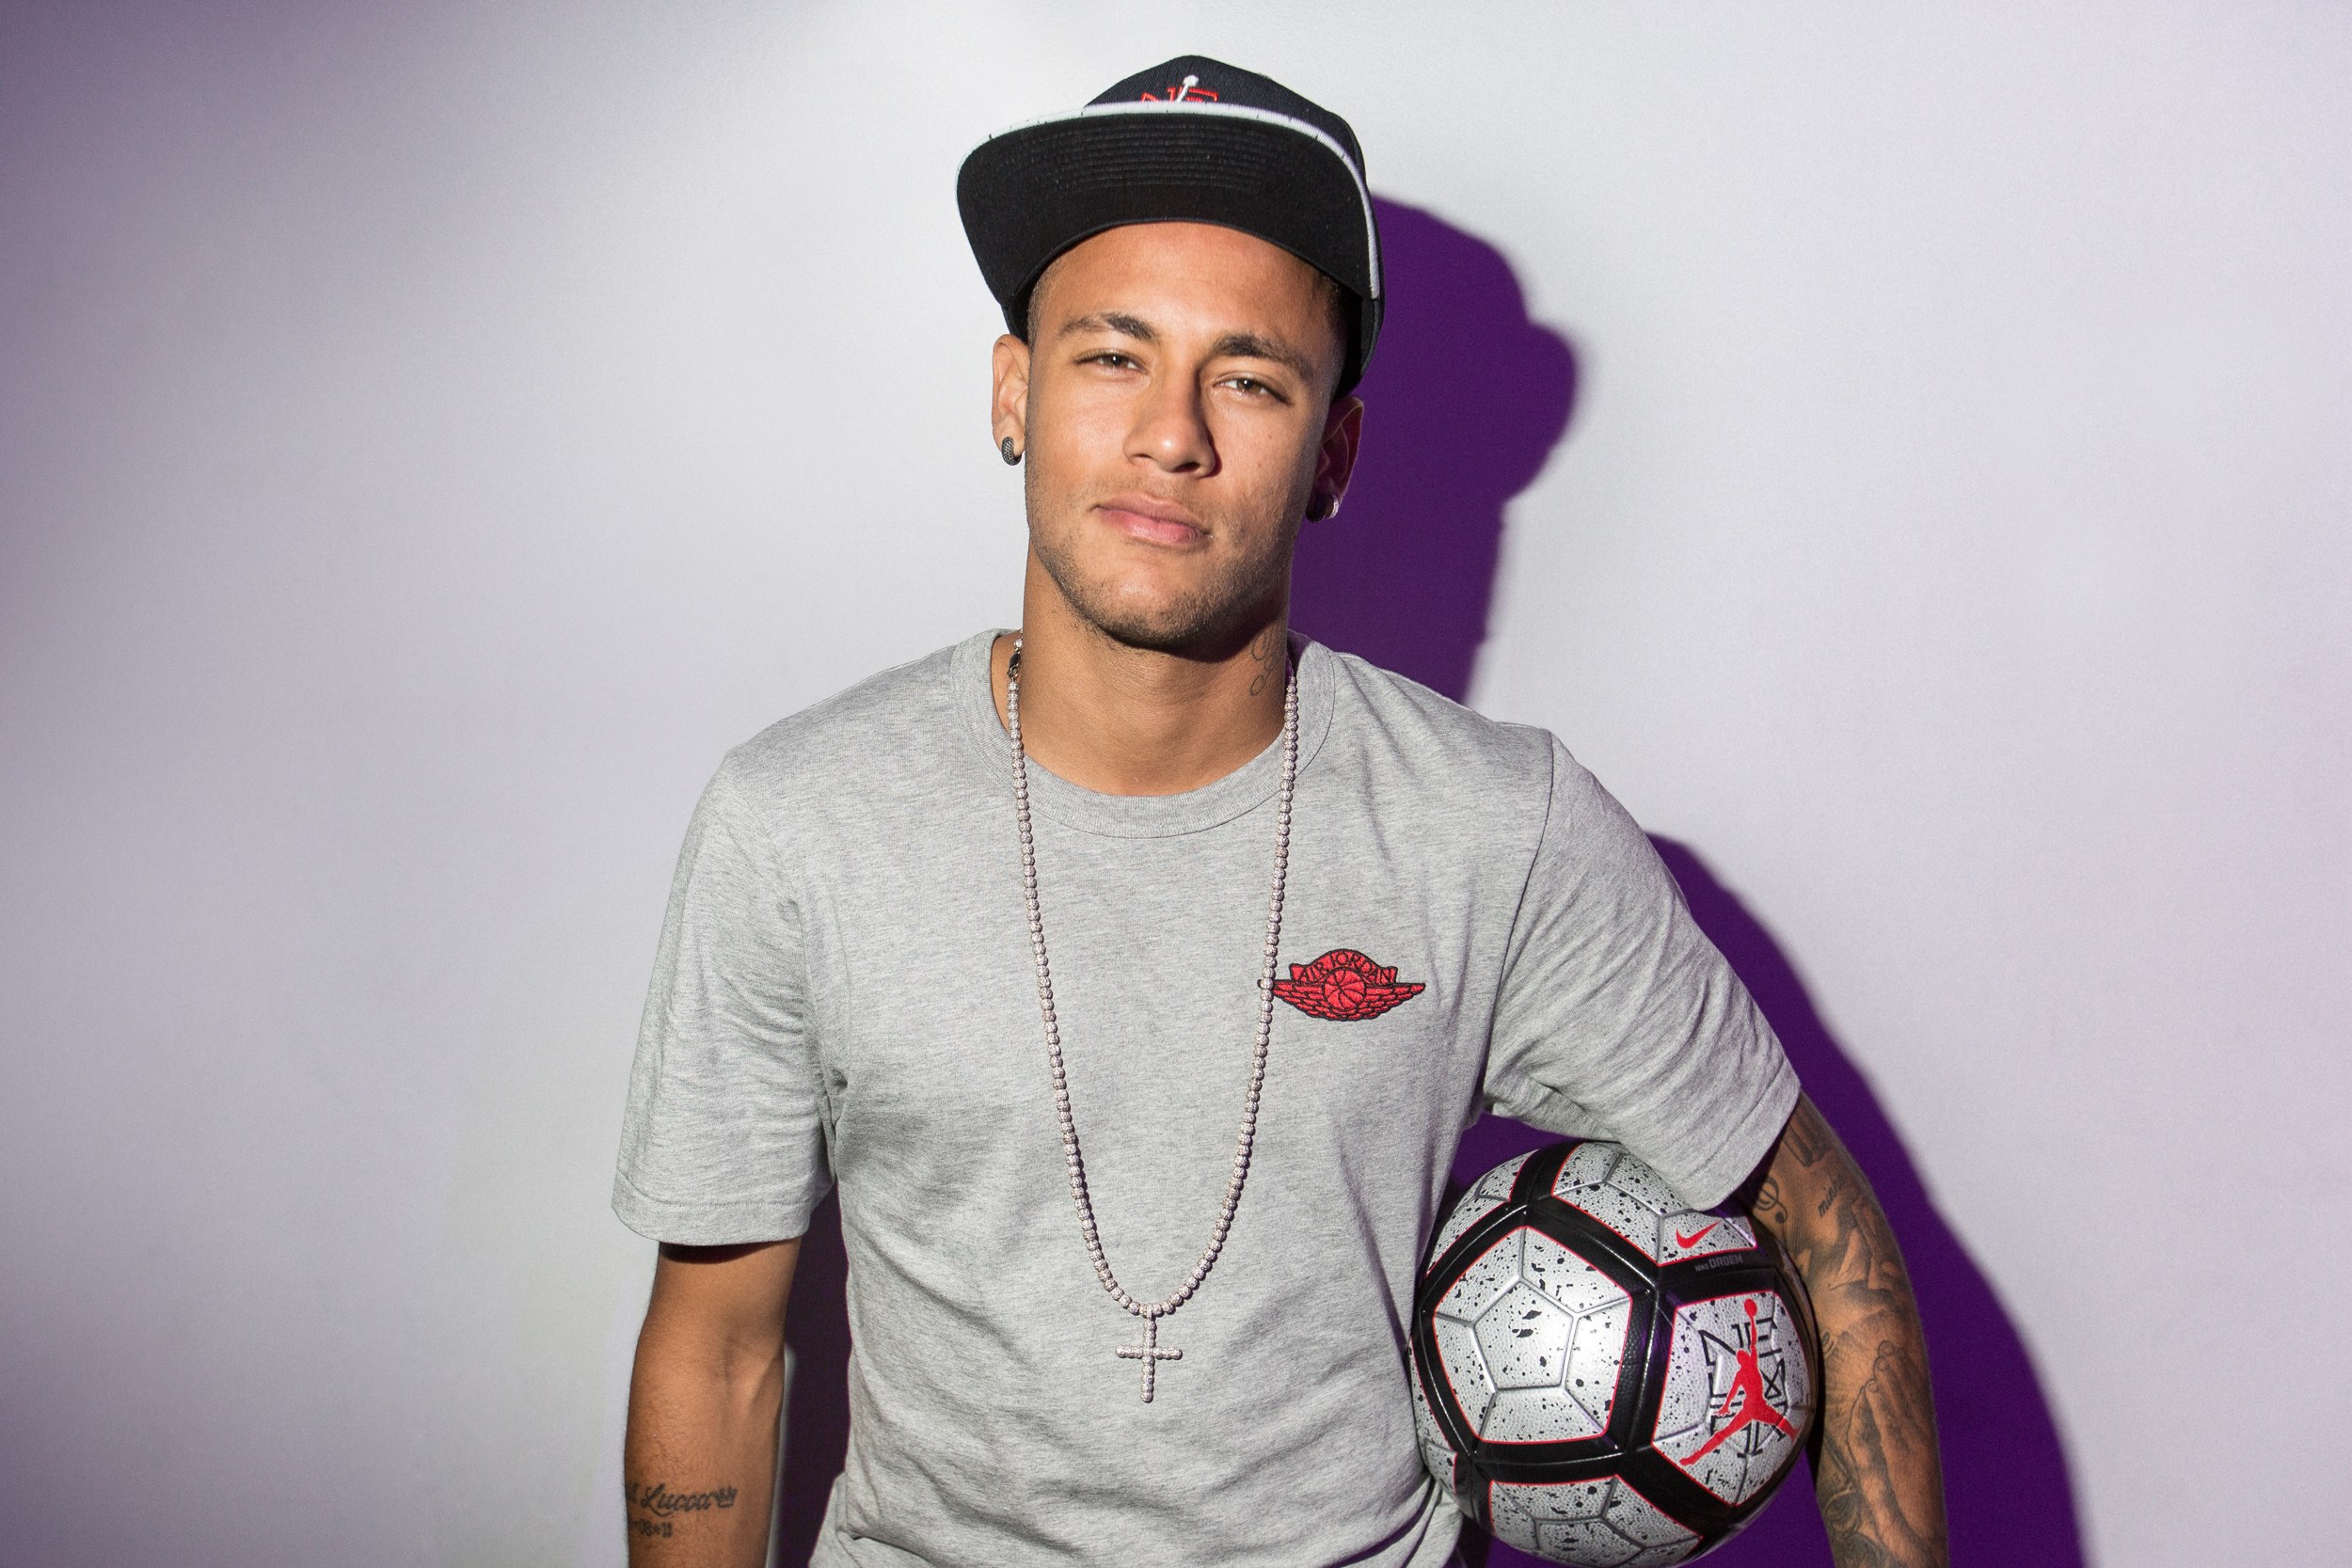 Neymar Sexy Wallpapers